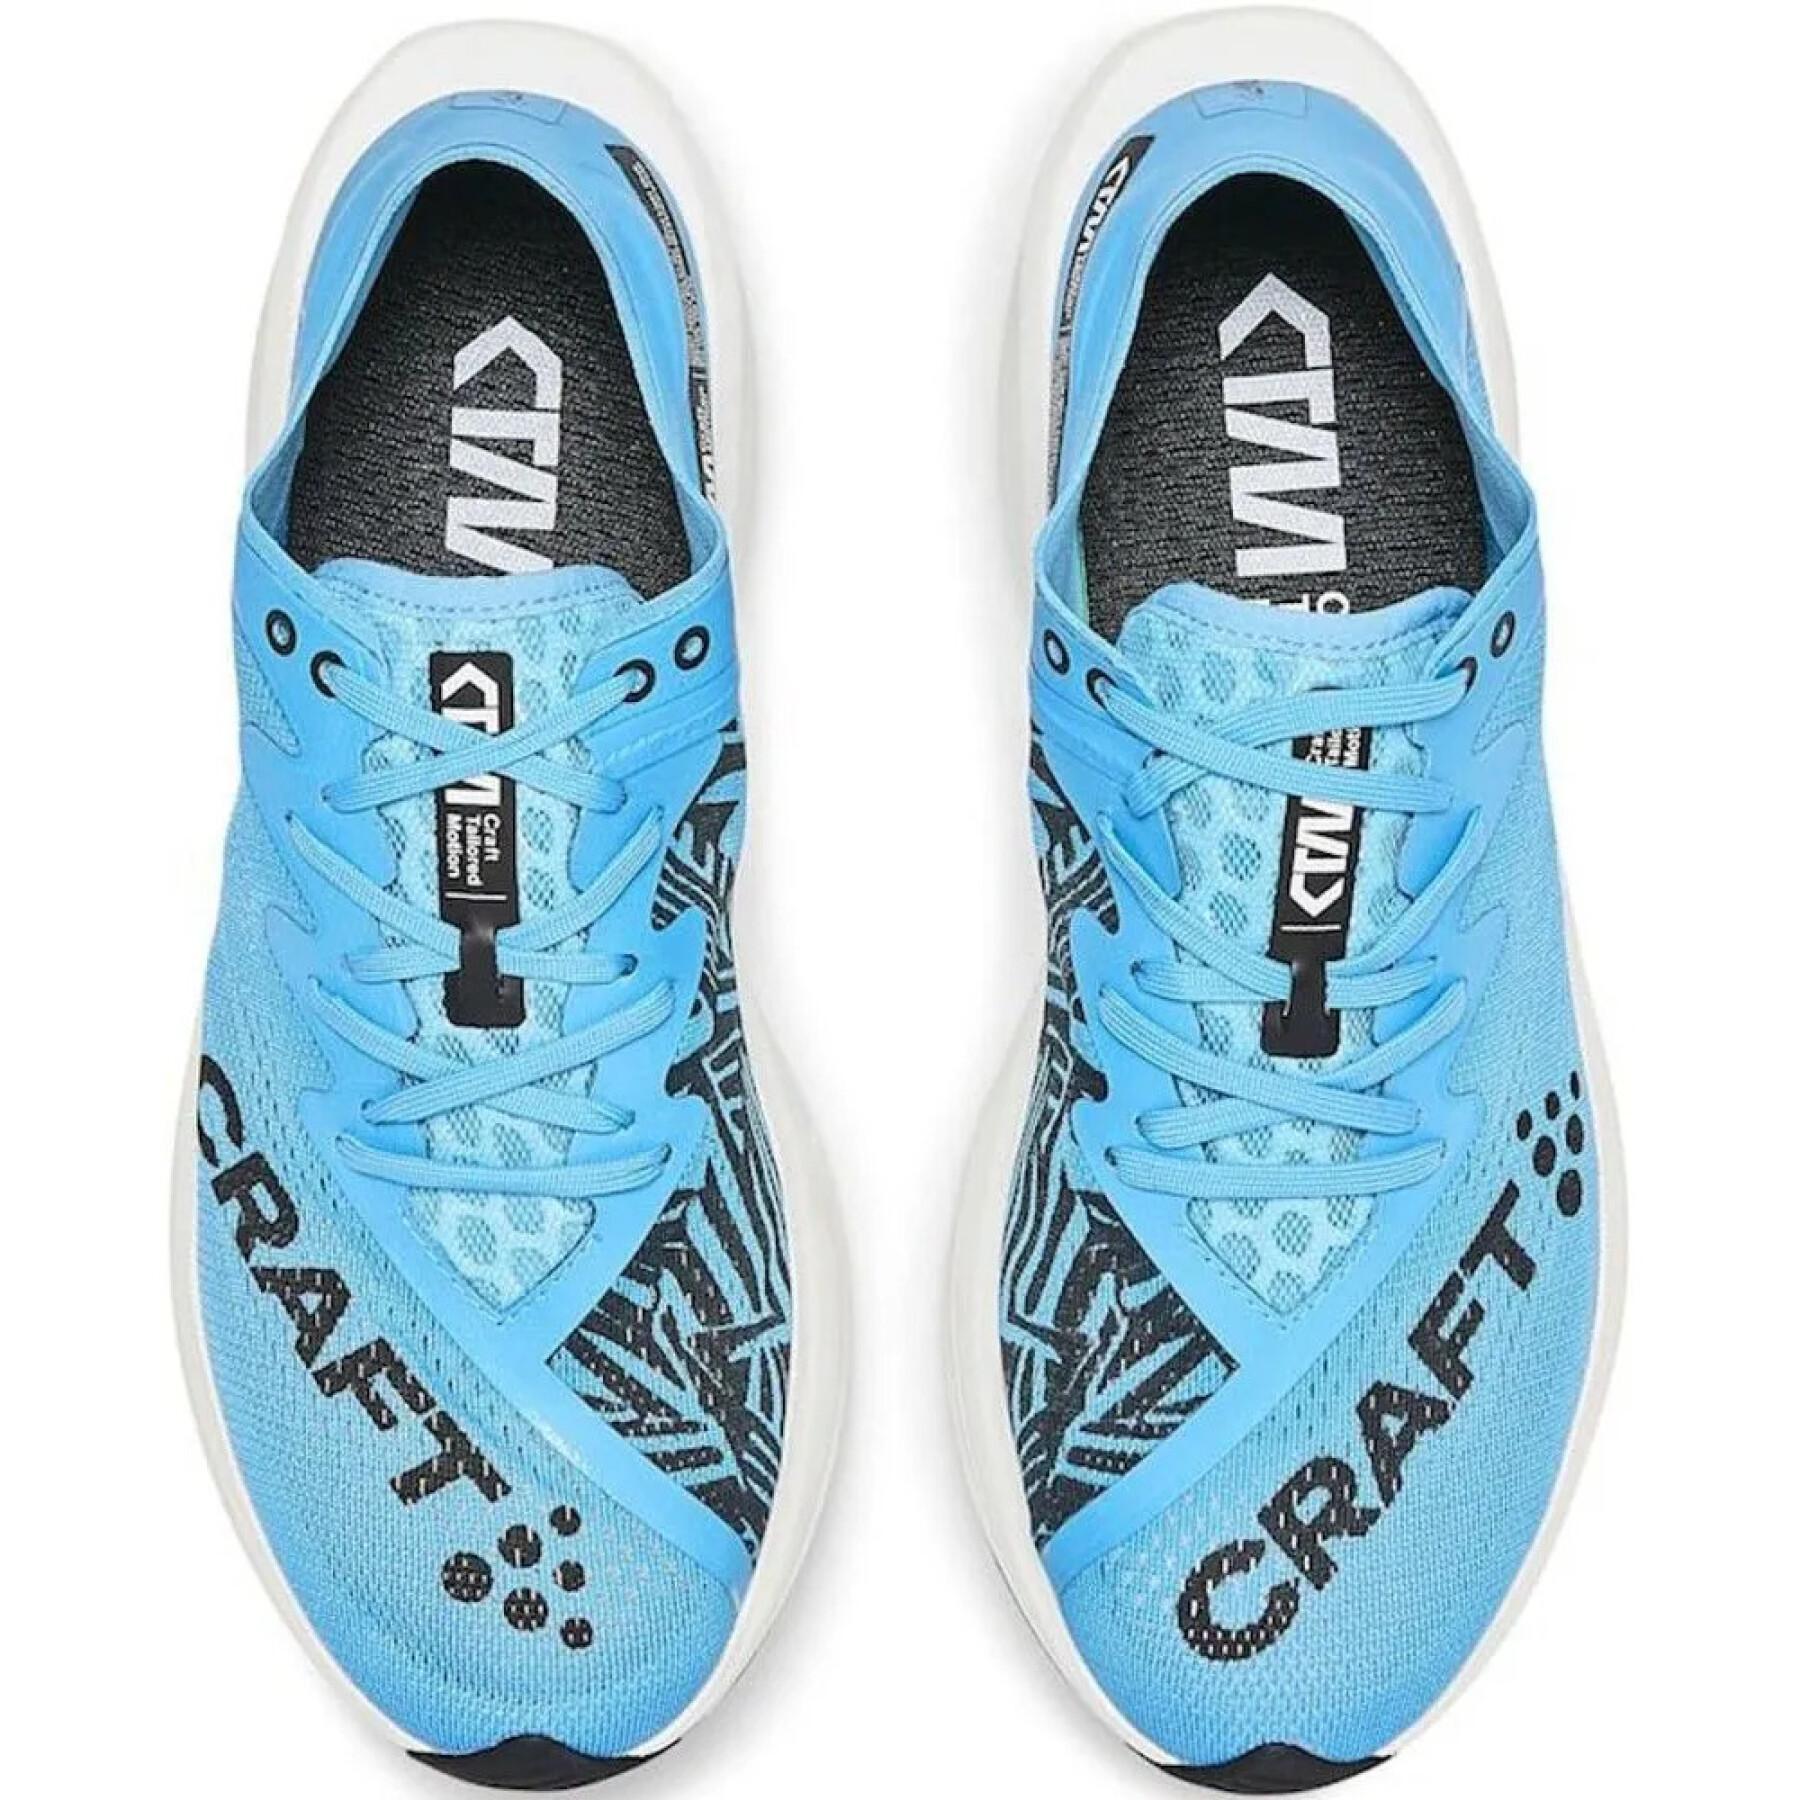 Zapatos Craft ctm ultra carbon